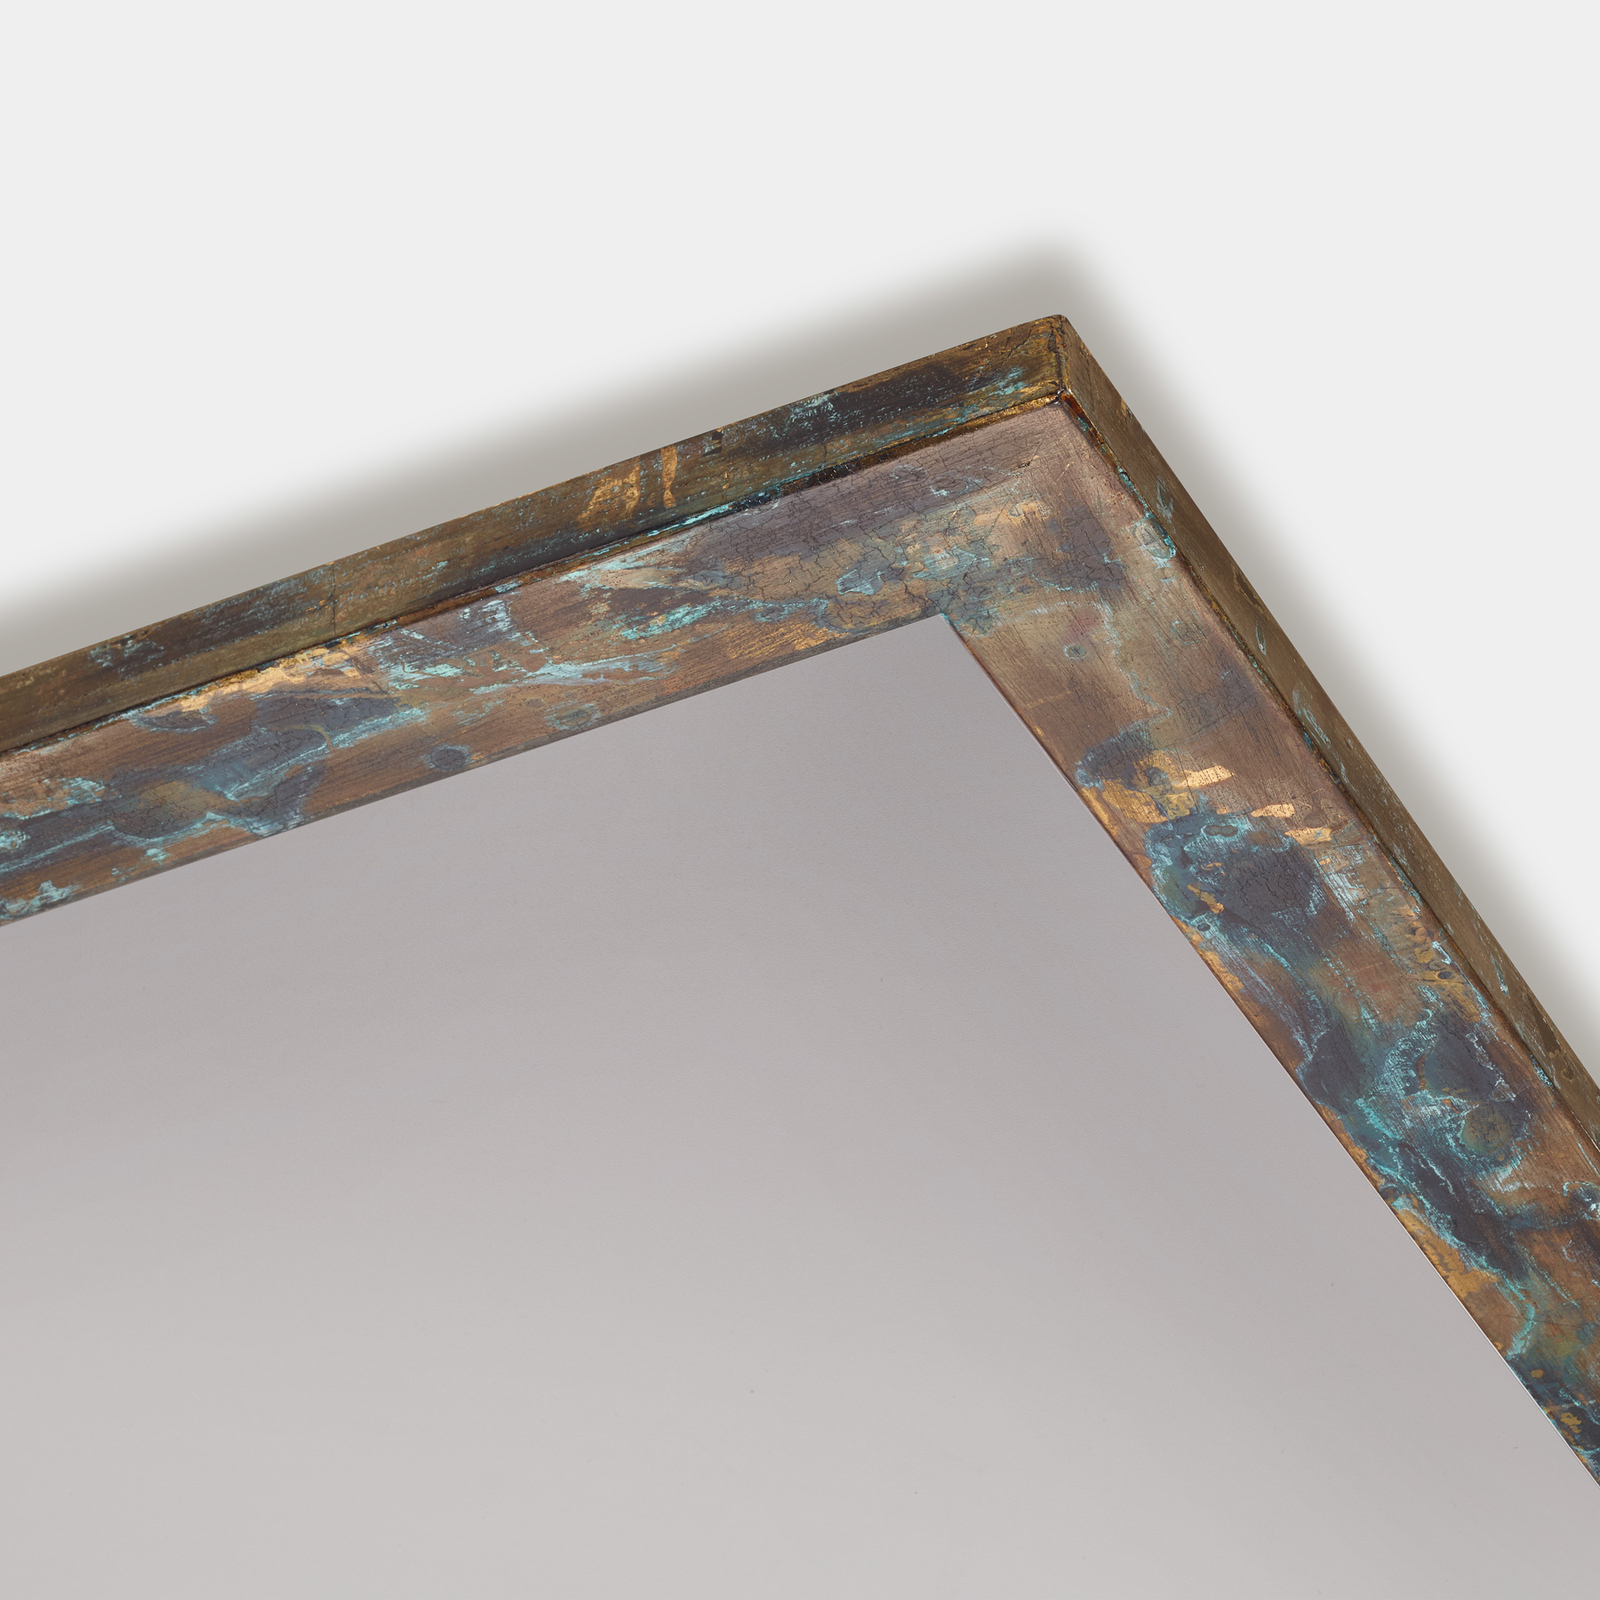 Panel Quitani Aurinor LED, zlatá patina, 68 cm